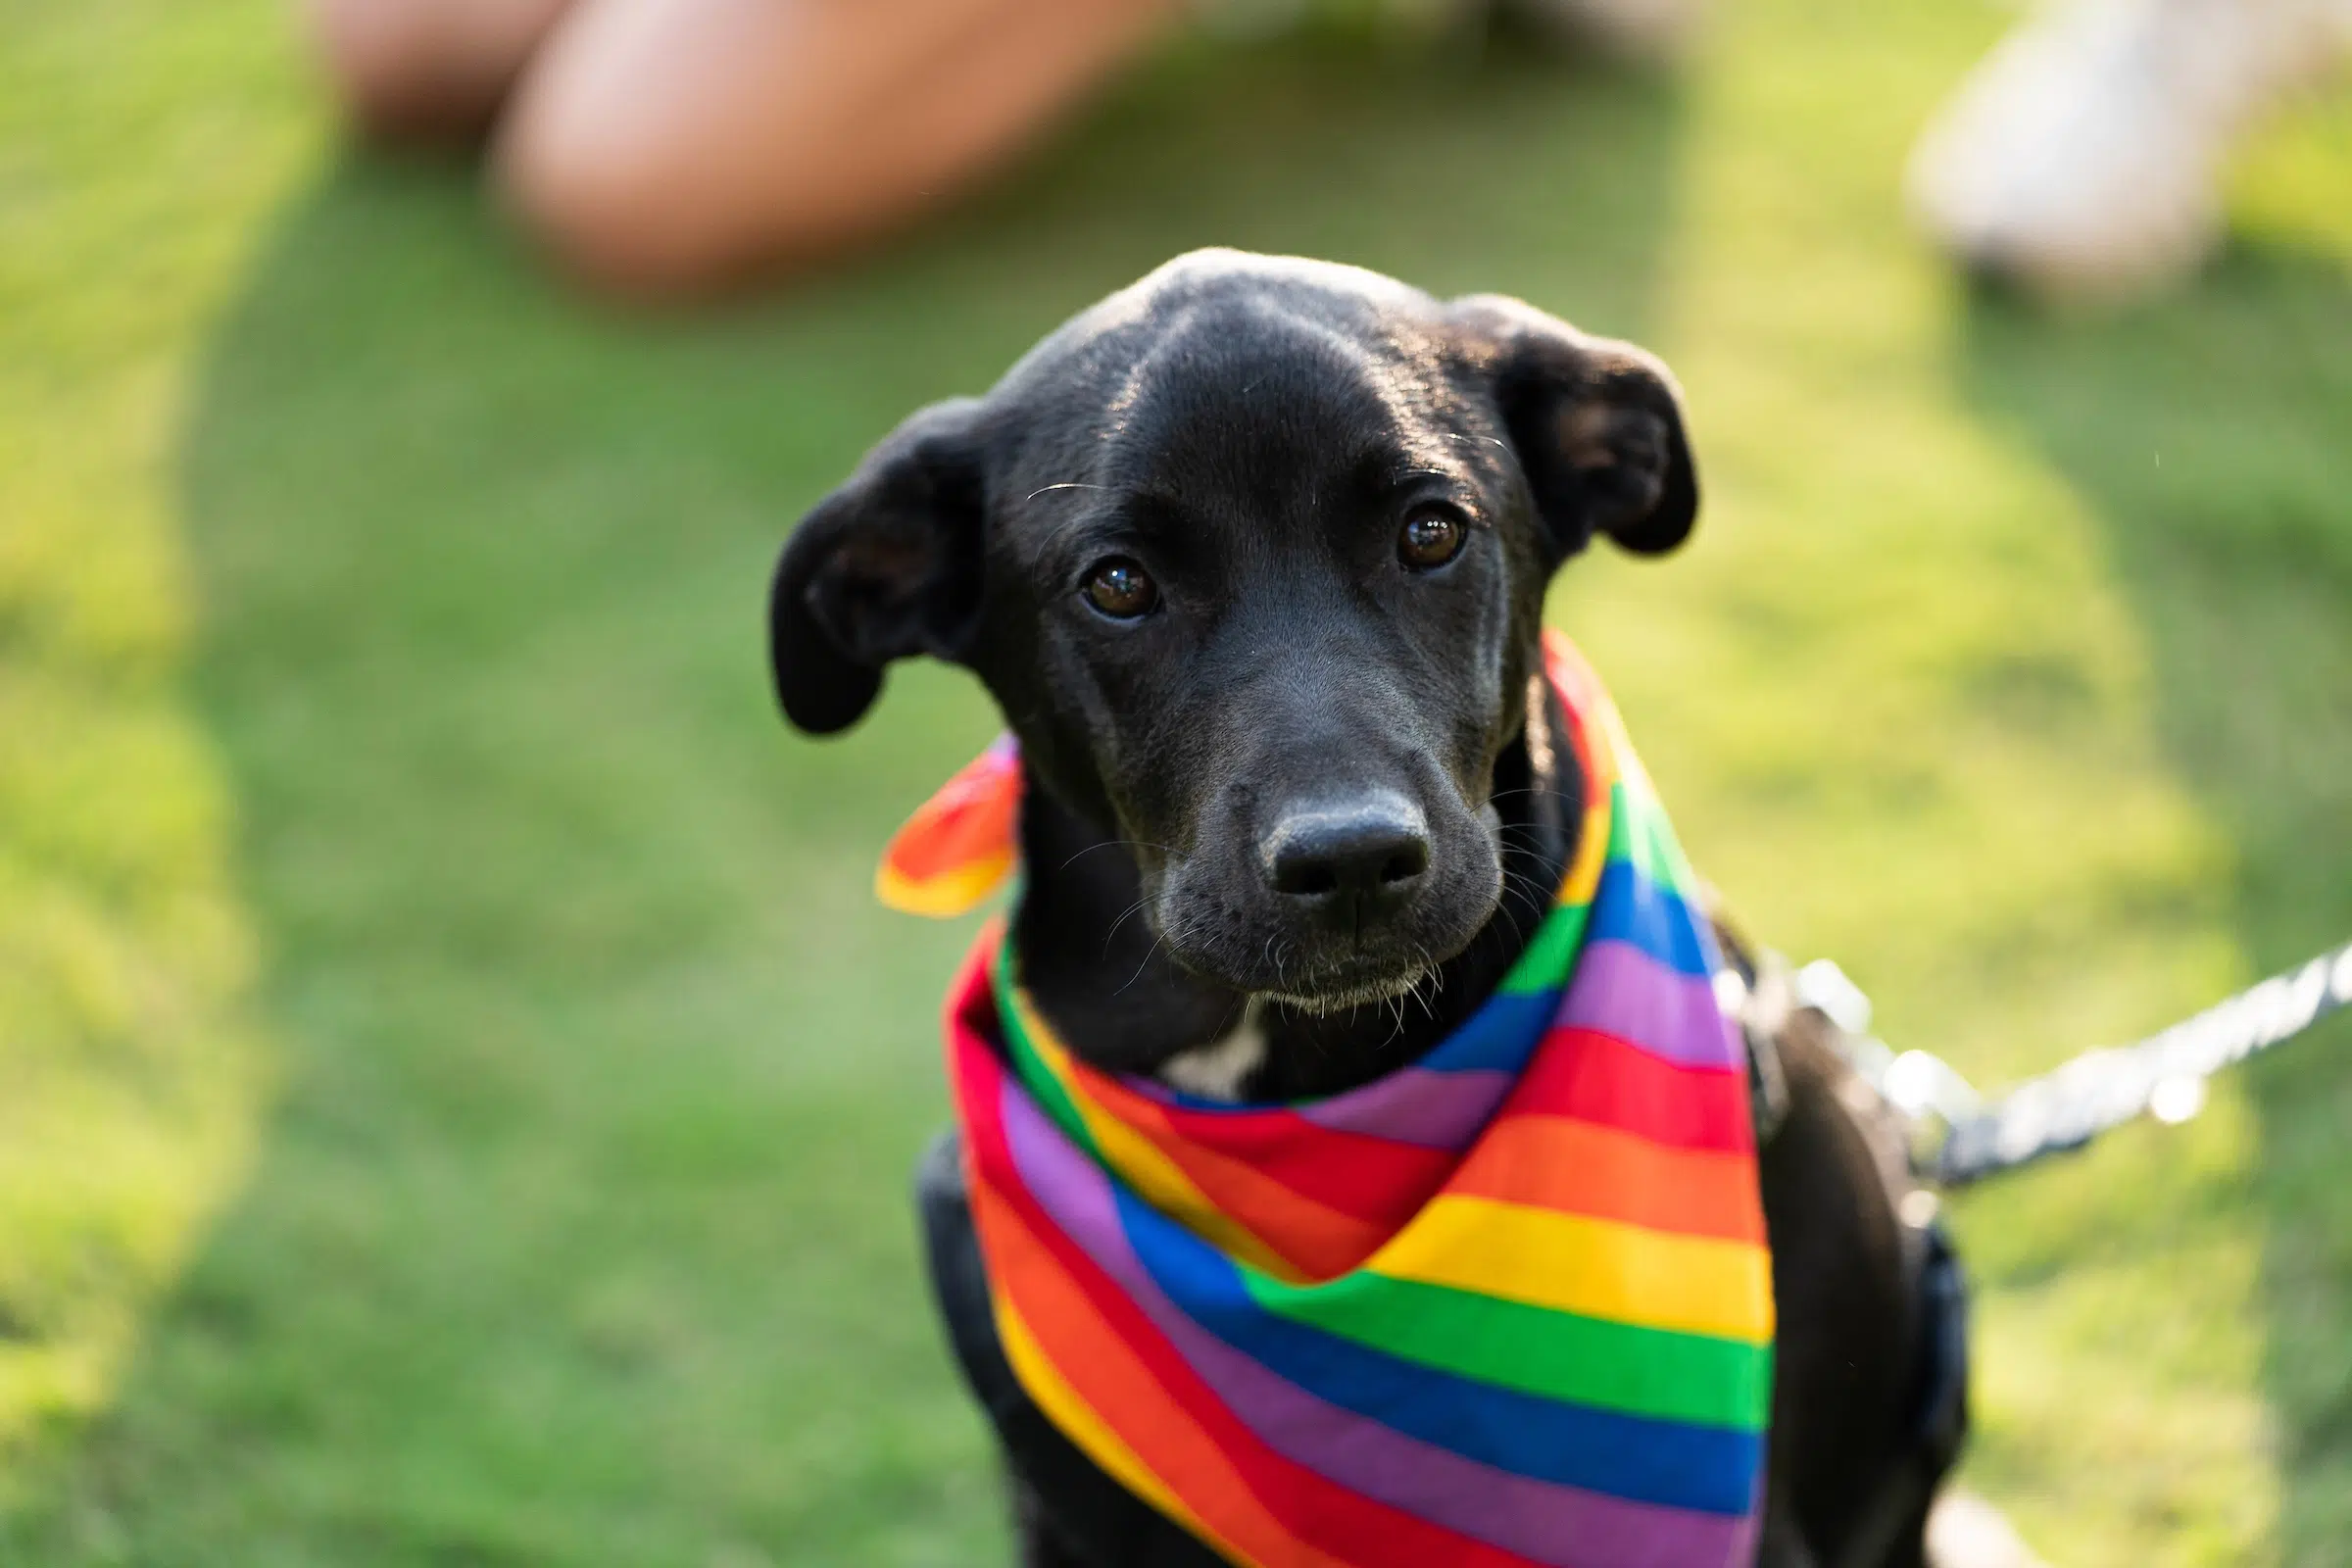 A black dog wearing a rainbow bandana sits on a soccer field.